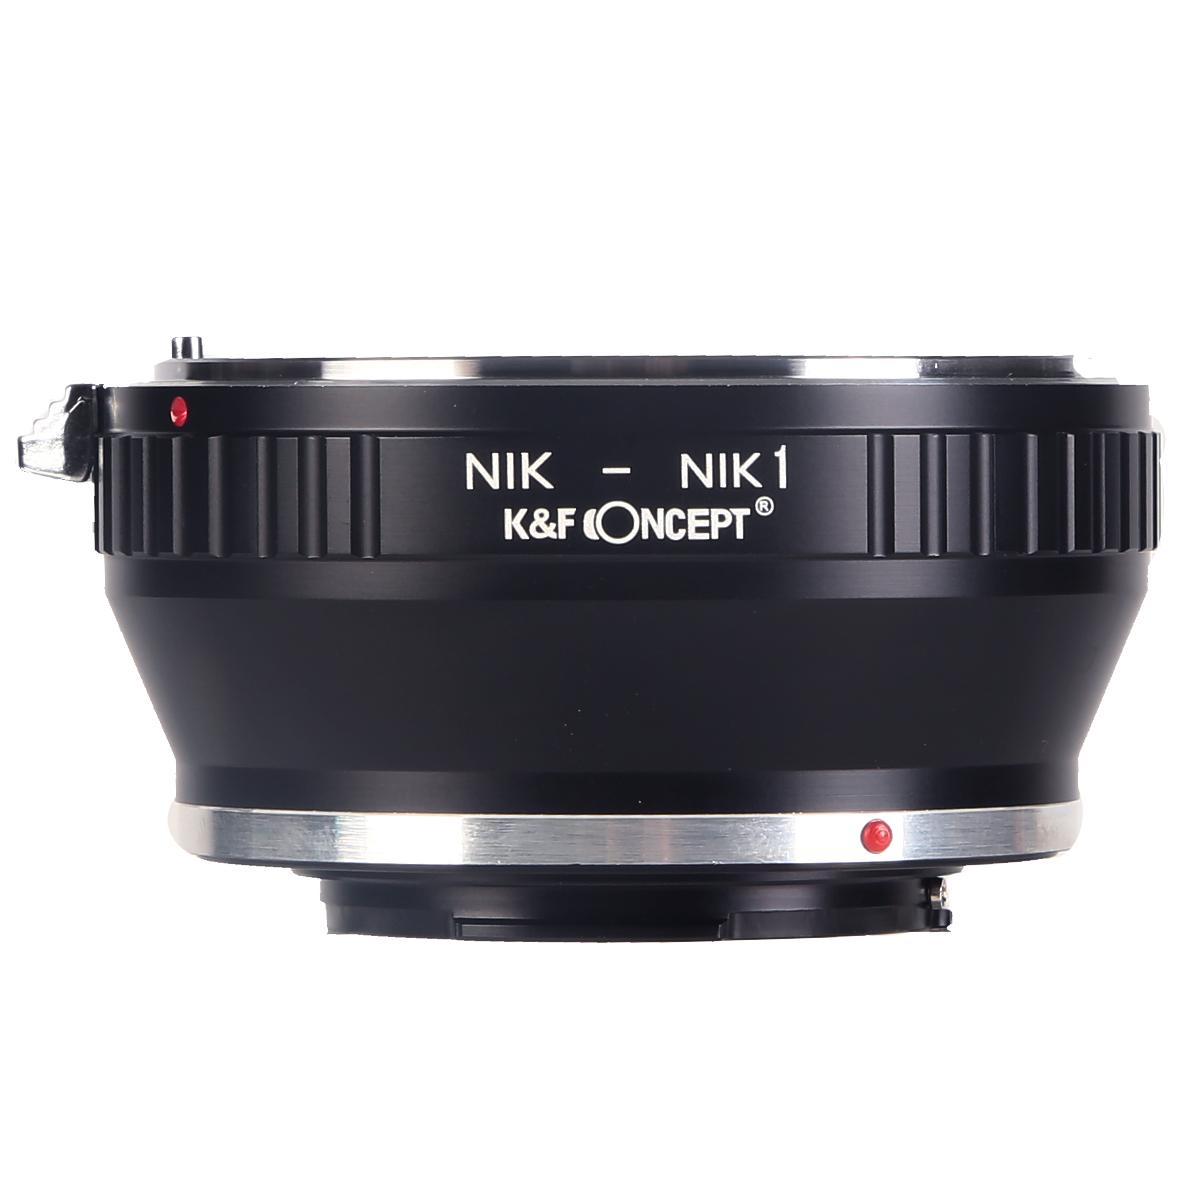 K&F Concept High Precision Lens Adapter KF06.079 for NIKON - NIKON 1